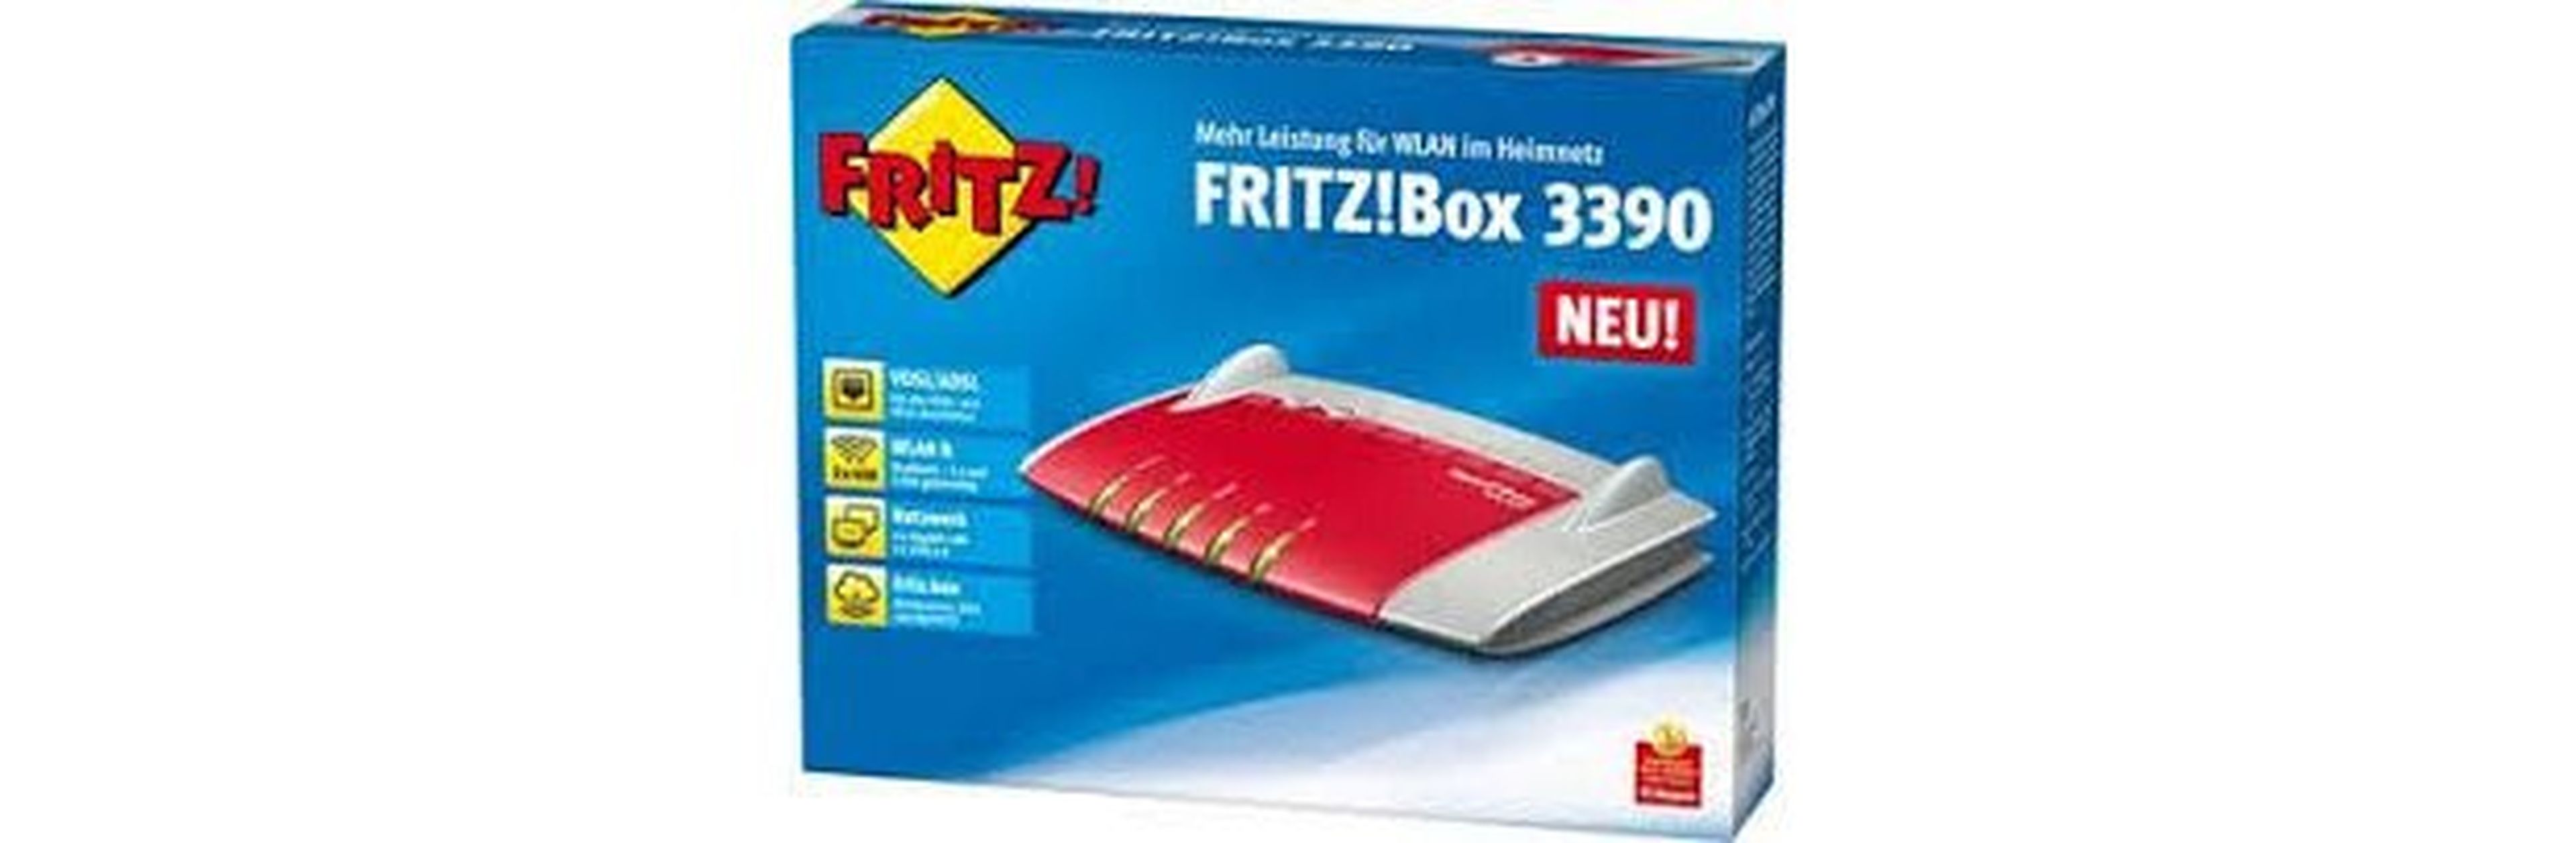 Fritbox 3390